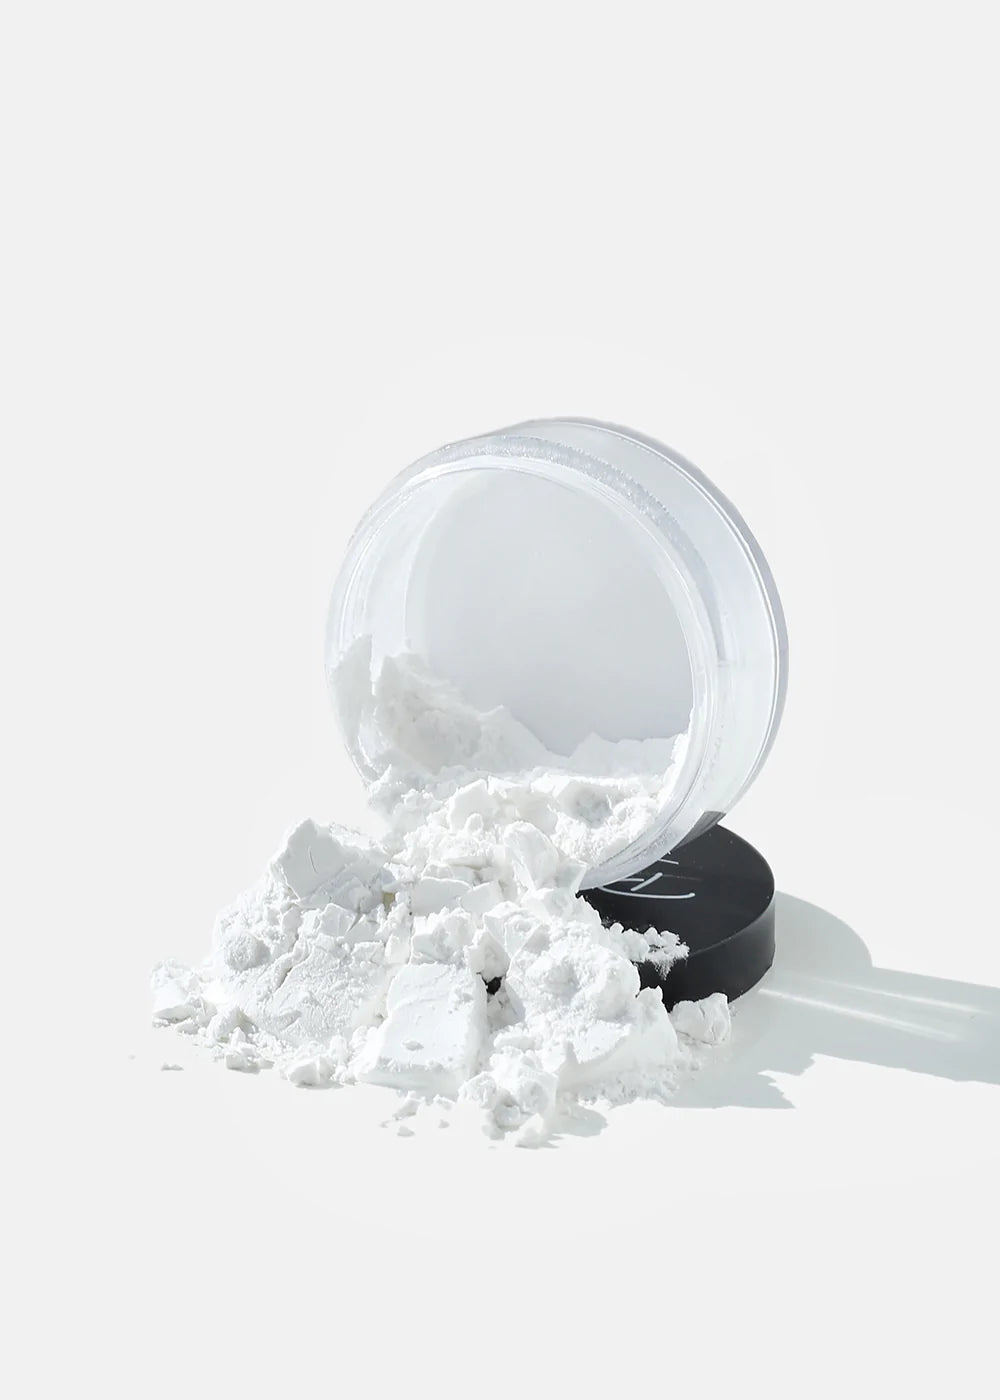 AOA studio Perfect - Finishing pressed powder - INCI Beauty